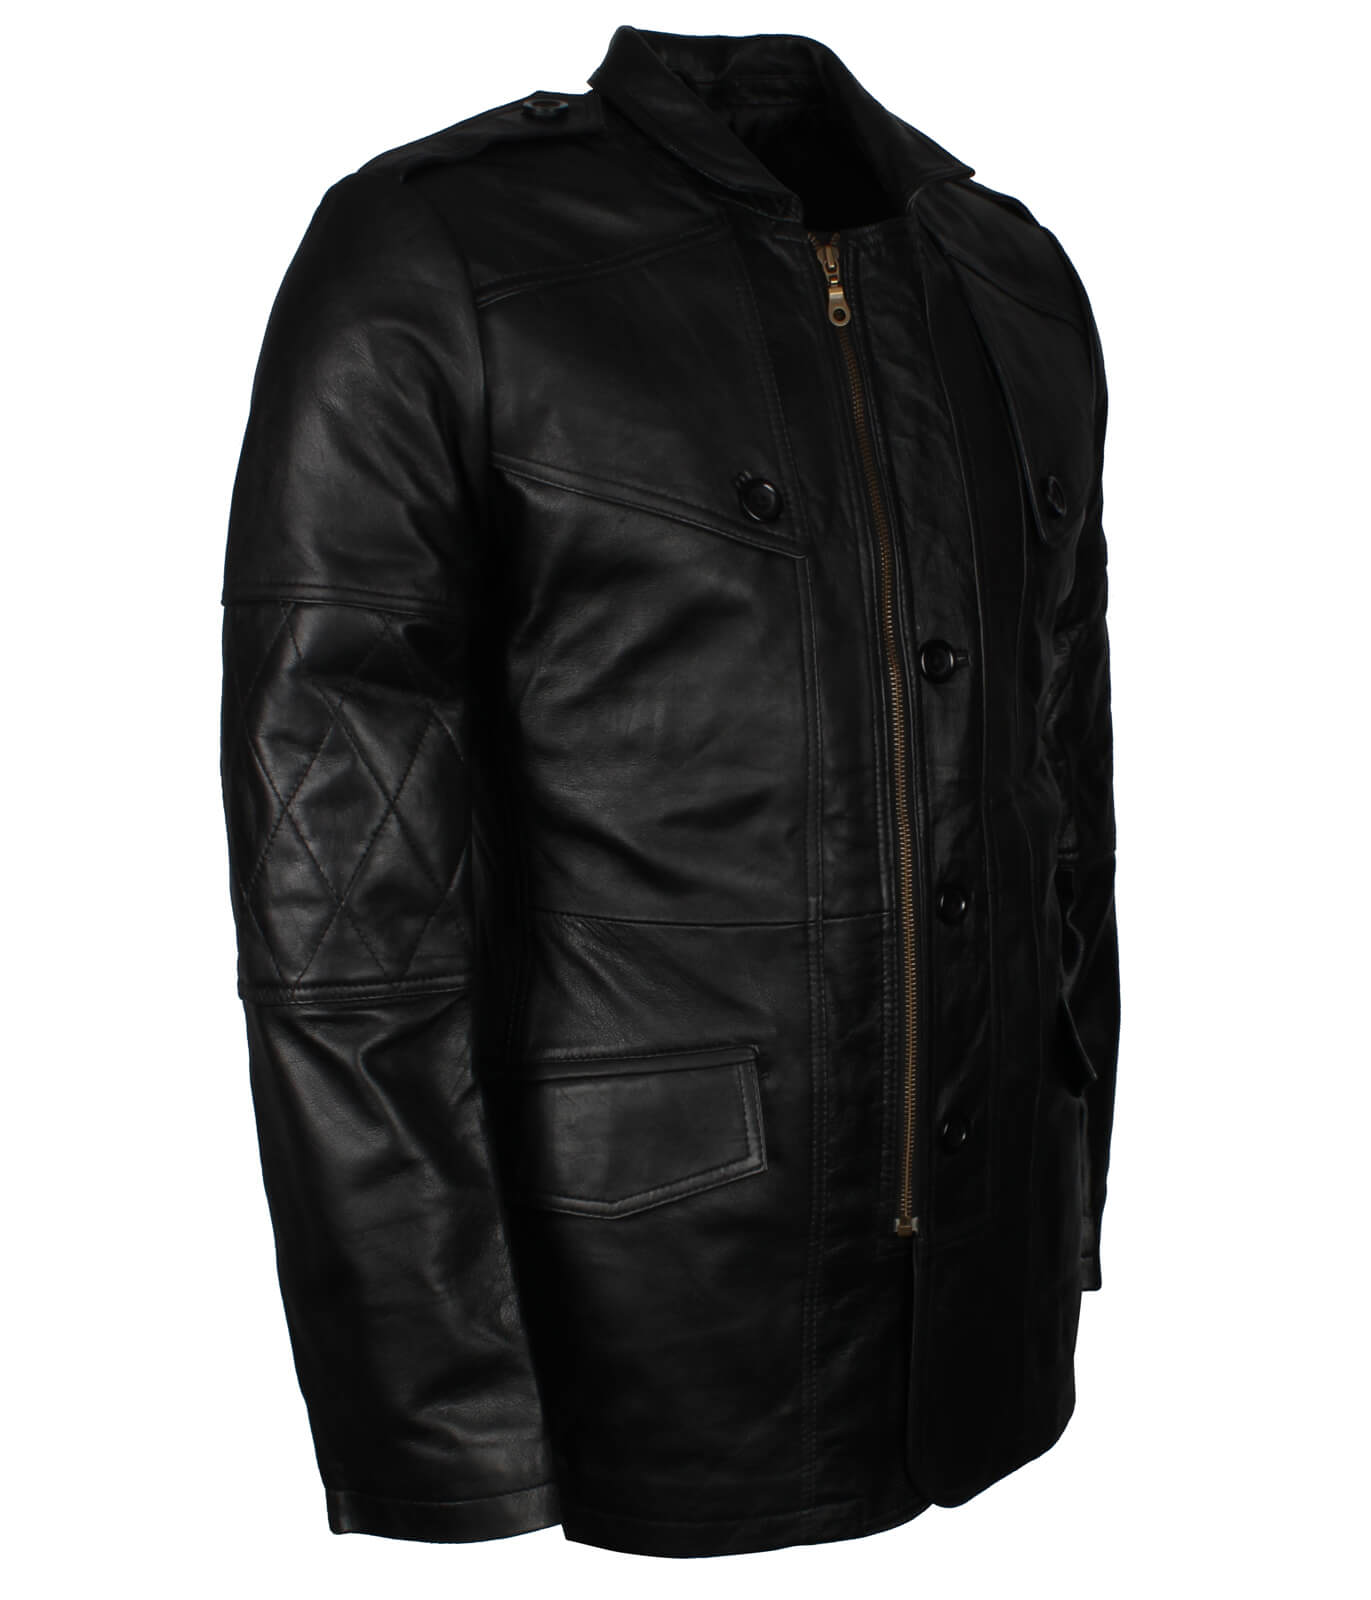  Black Genuine Leather Coat with Zipper